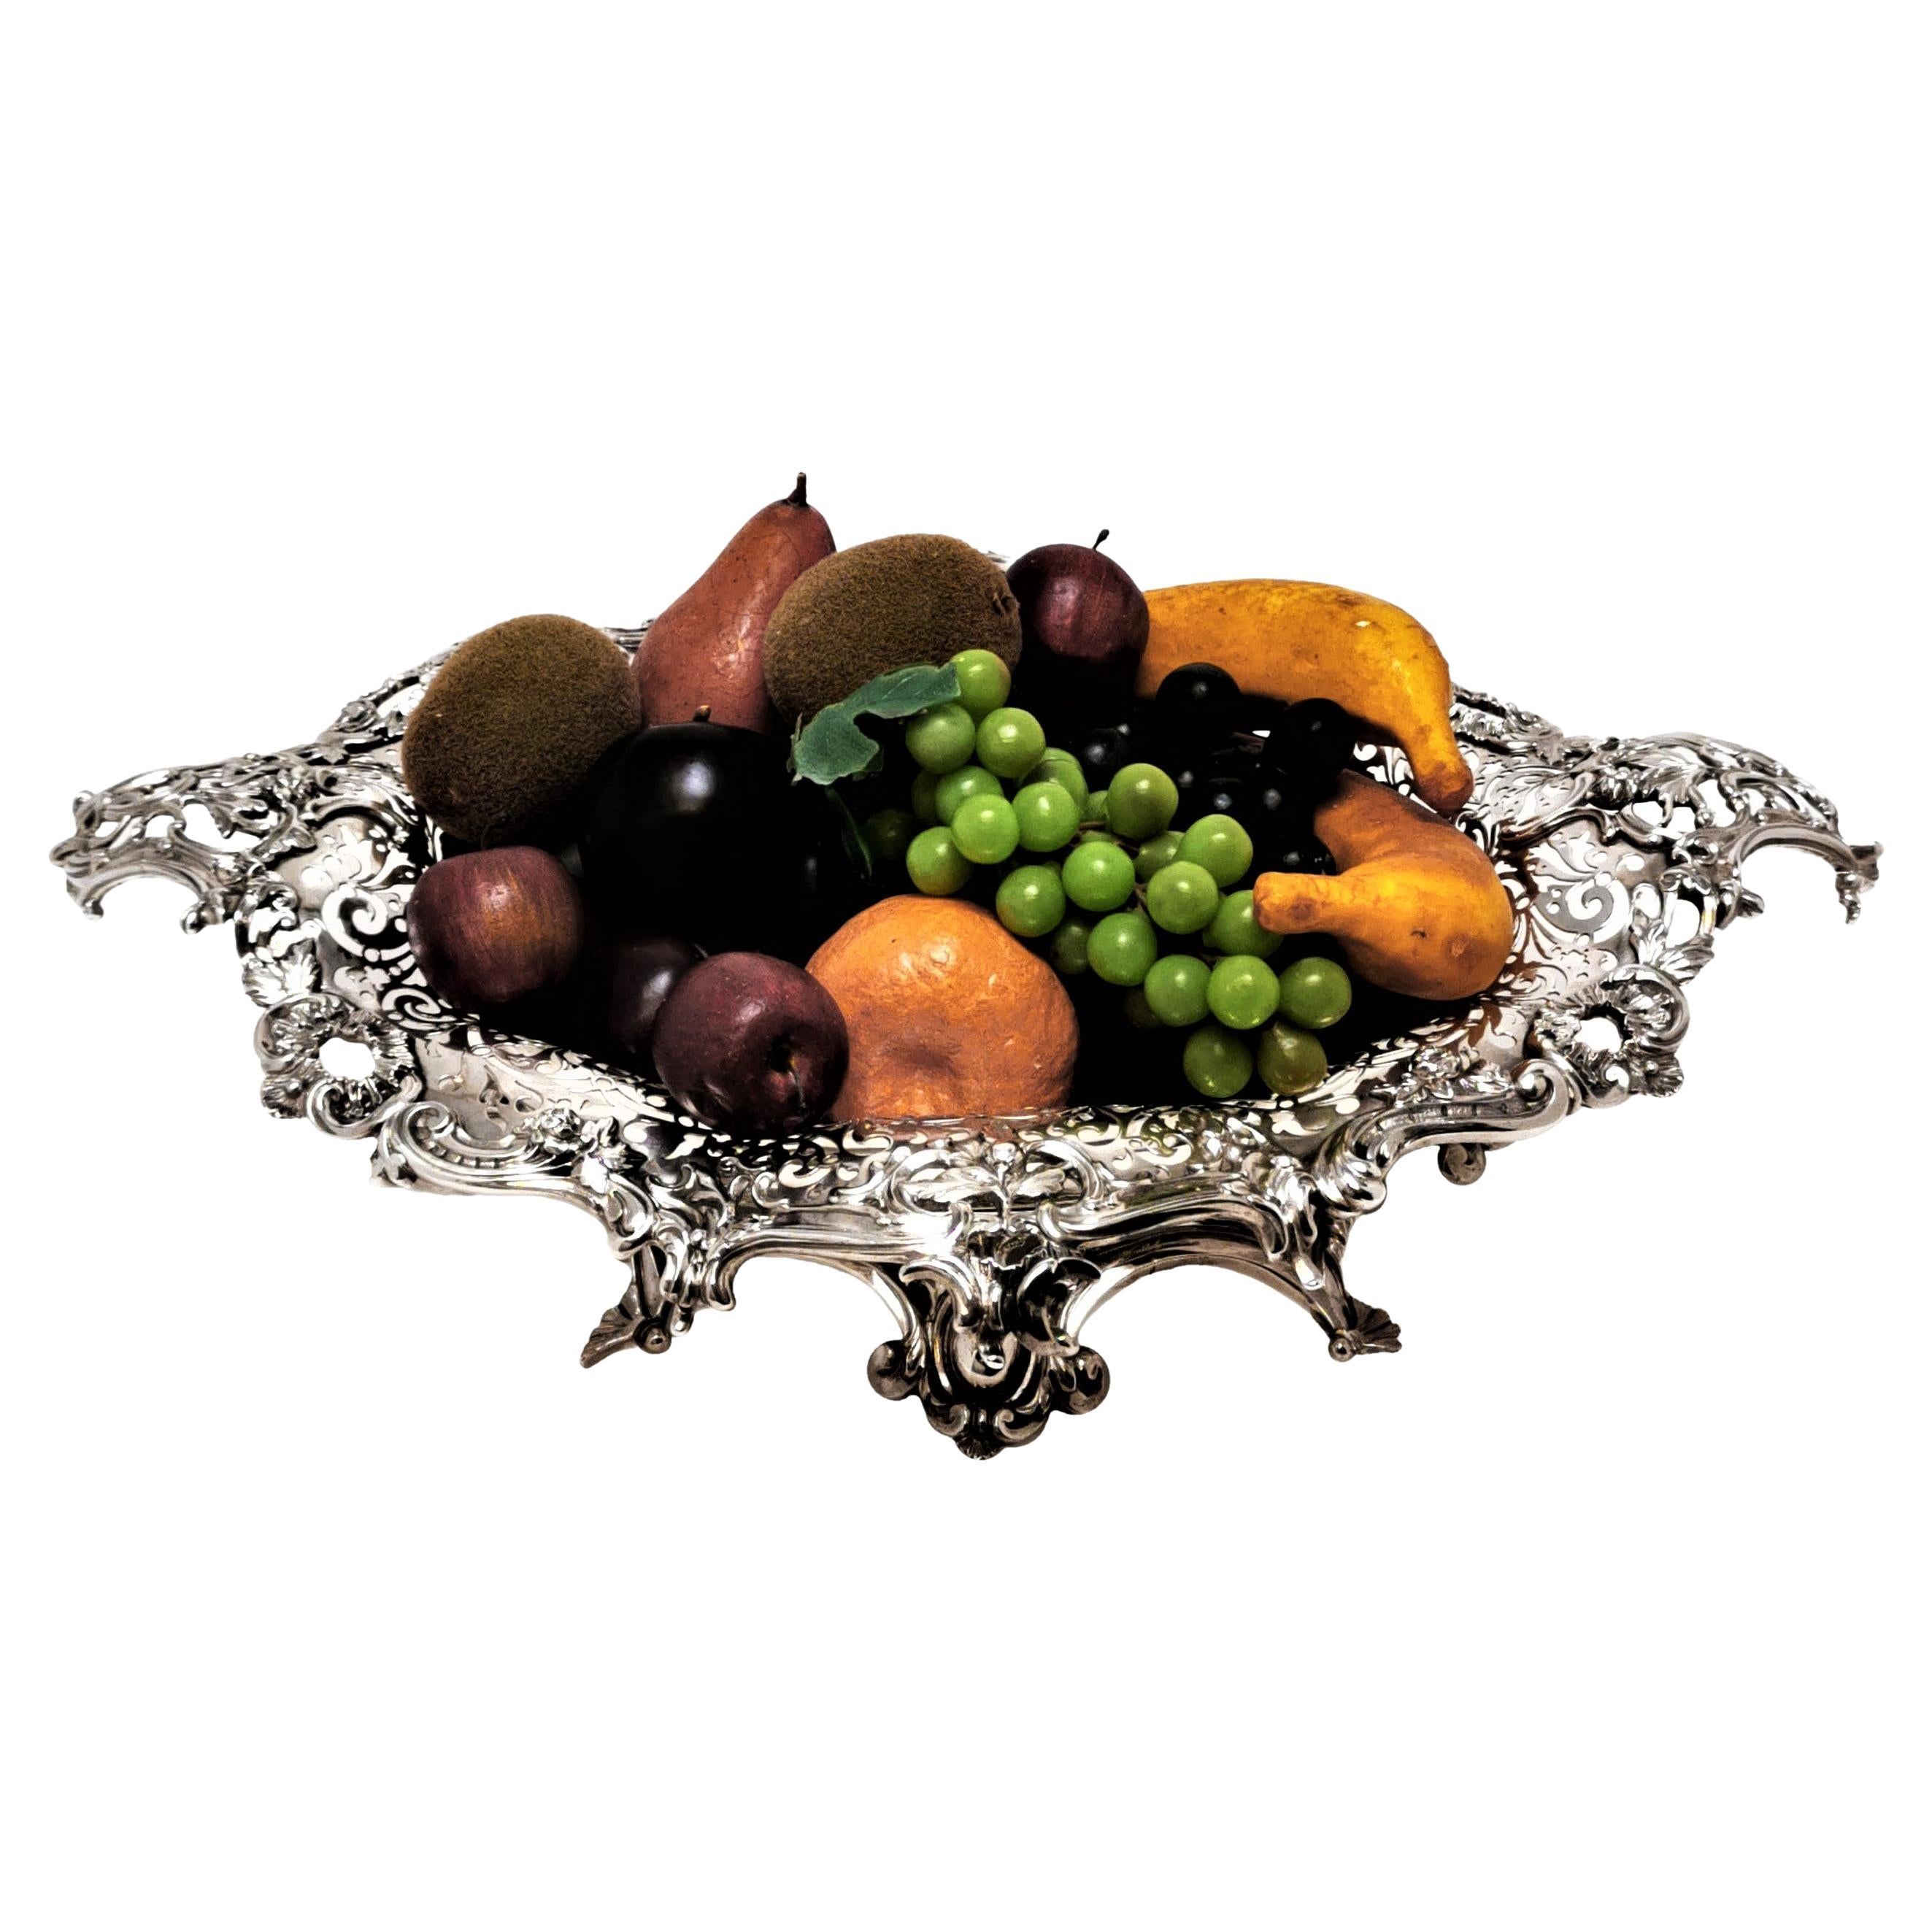 Large Antique Victorian Sterling Silver Dish / Bowl 1883 Fruit, Centrepiece